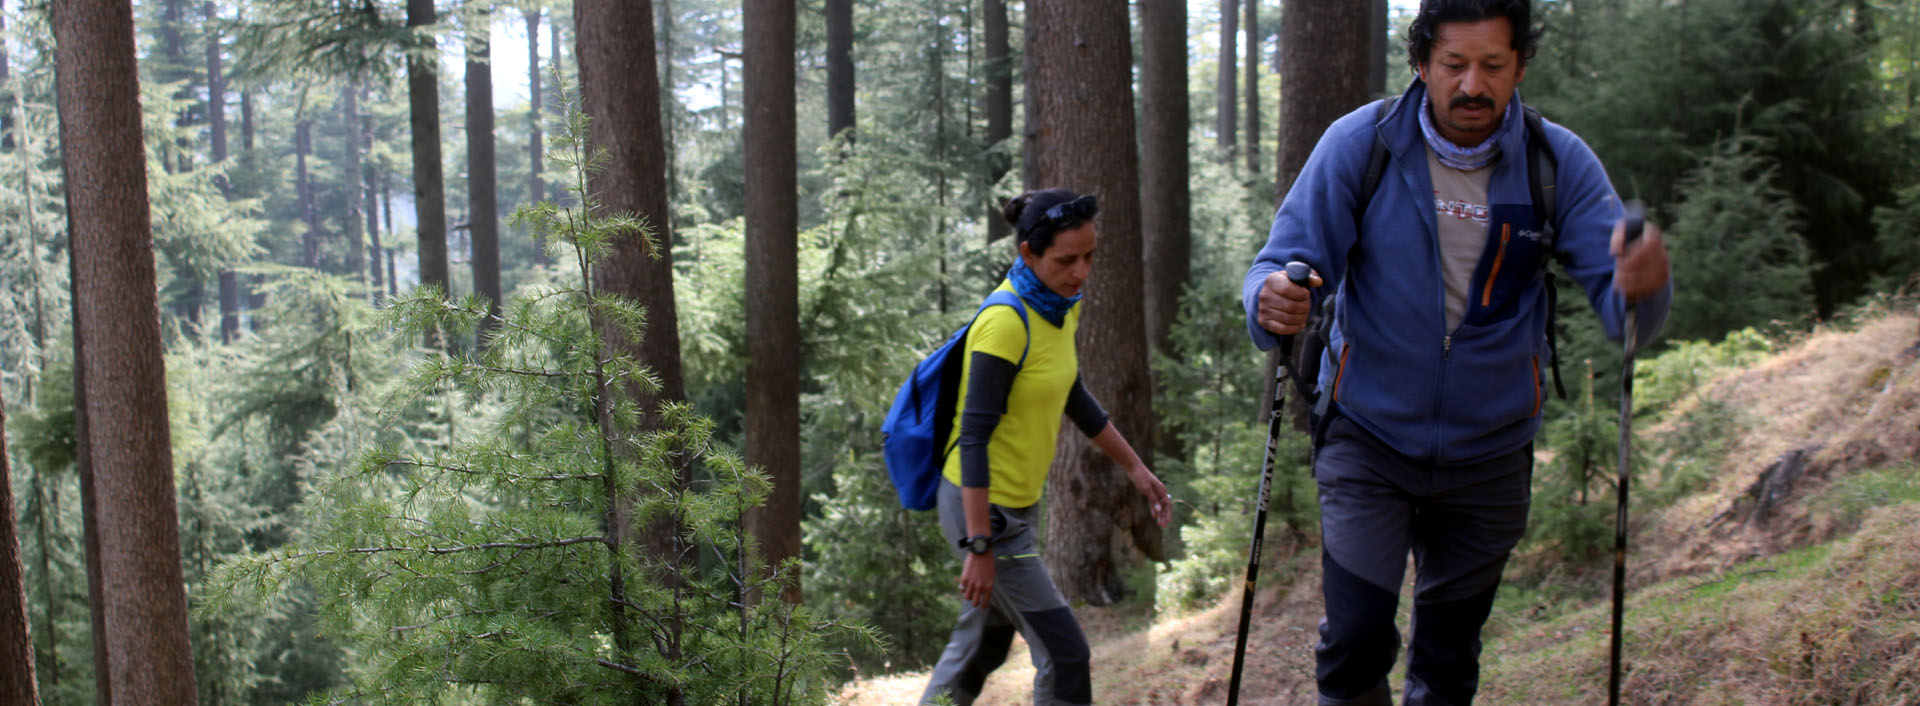 Surender Mahant and Shashi Tomar Lagwal hiking in Mountain skills course